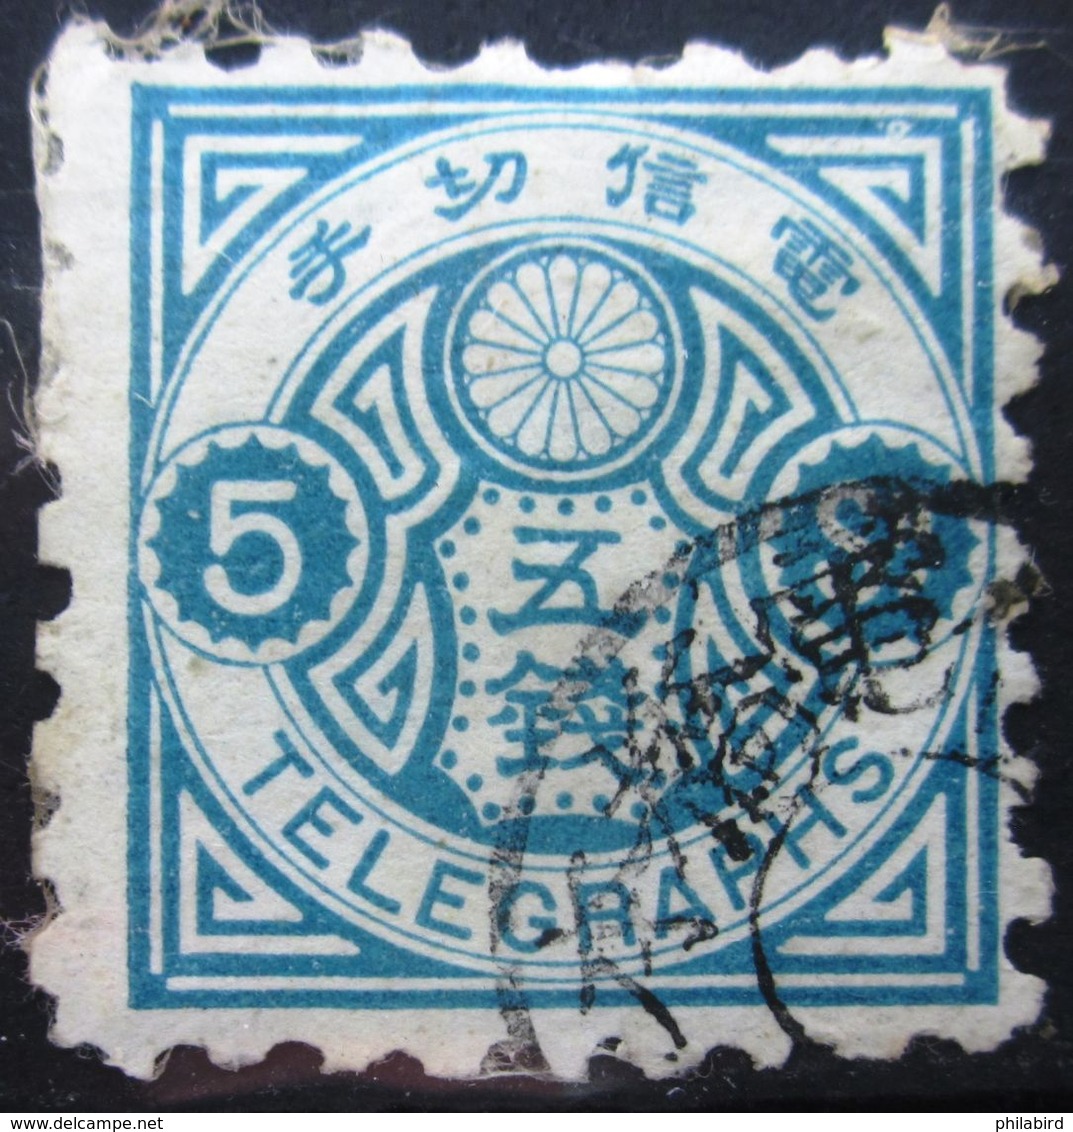 JAPON              Télégraphe 5               OBLITERE - Telegraphenmarken